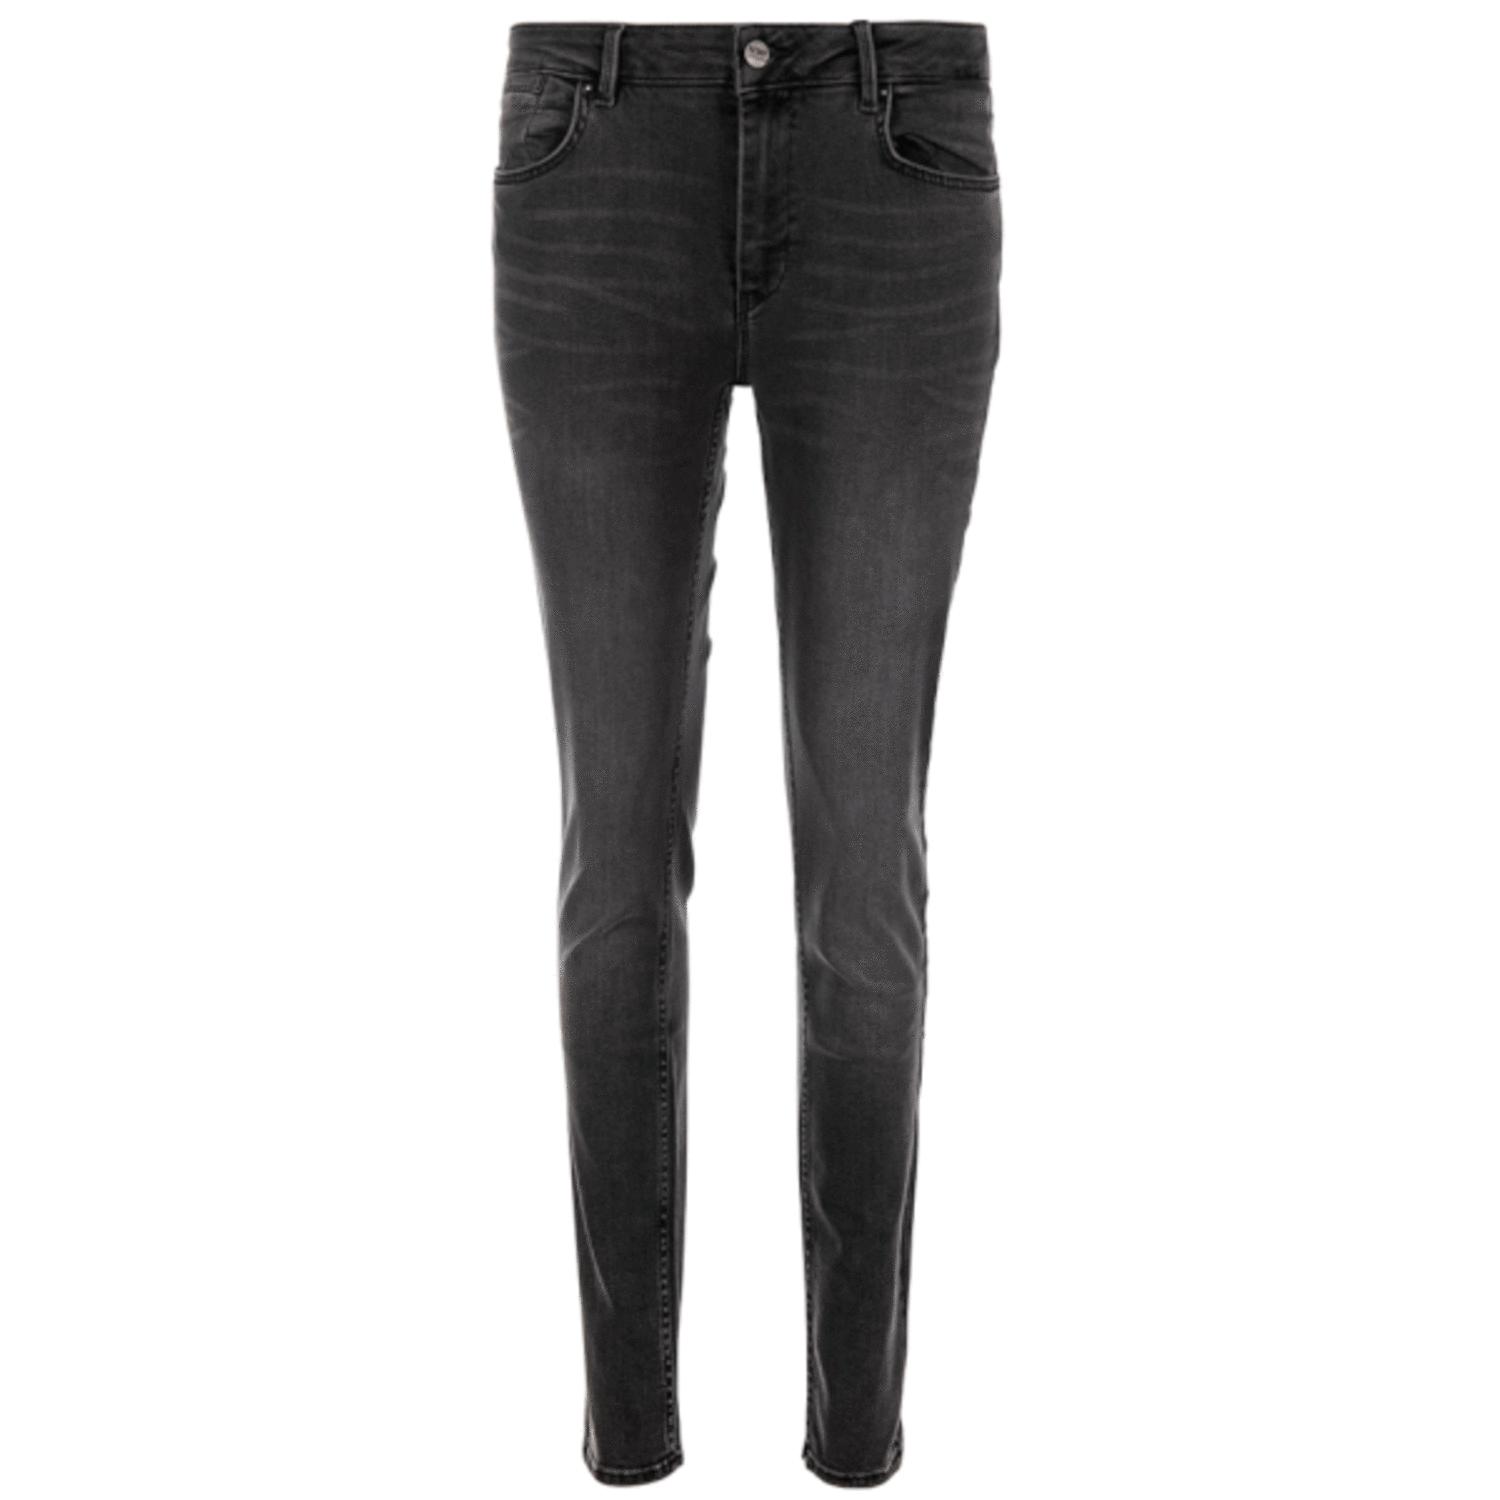 Reiko Nelly Dark Grey Skinny Jeans in Black | Lyst